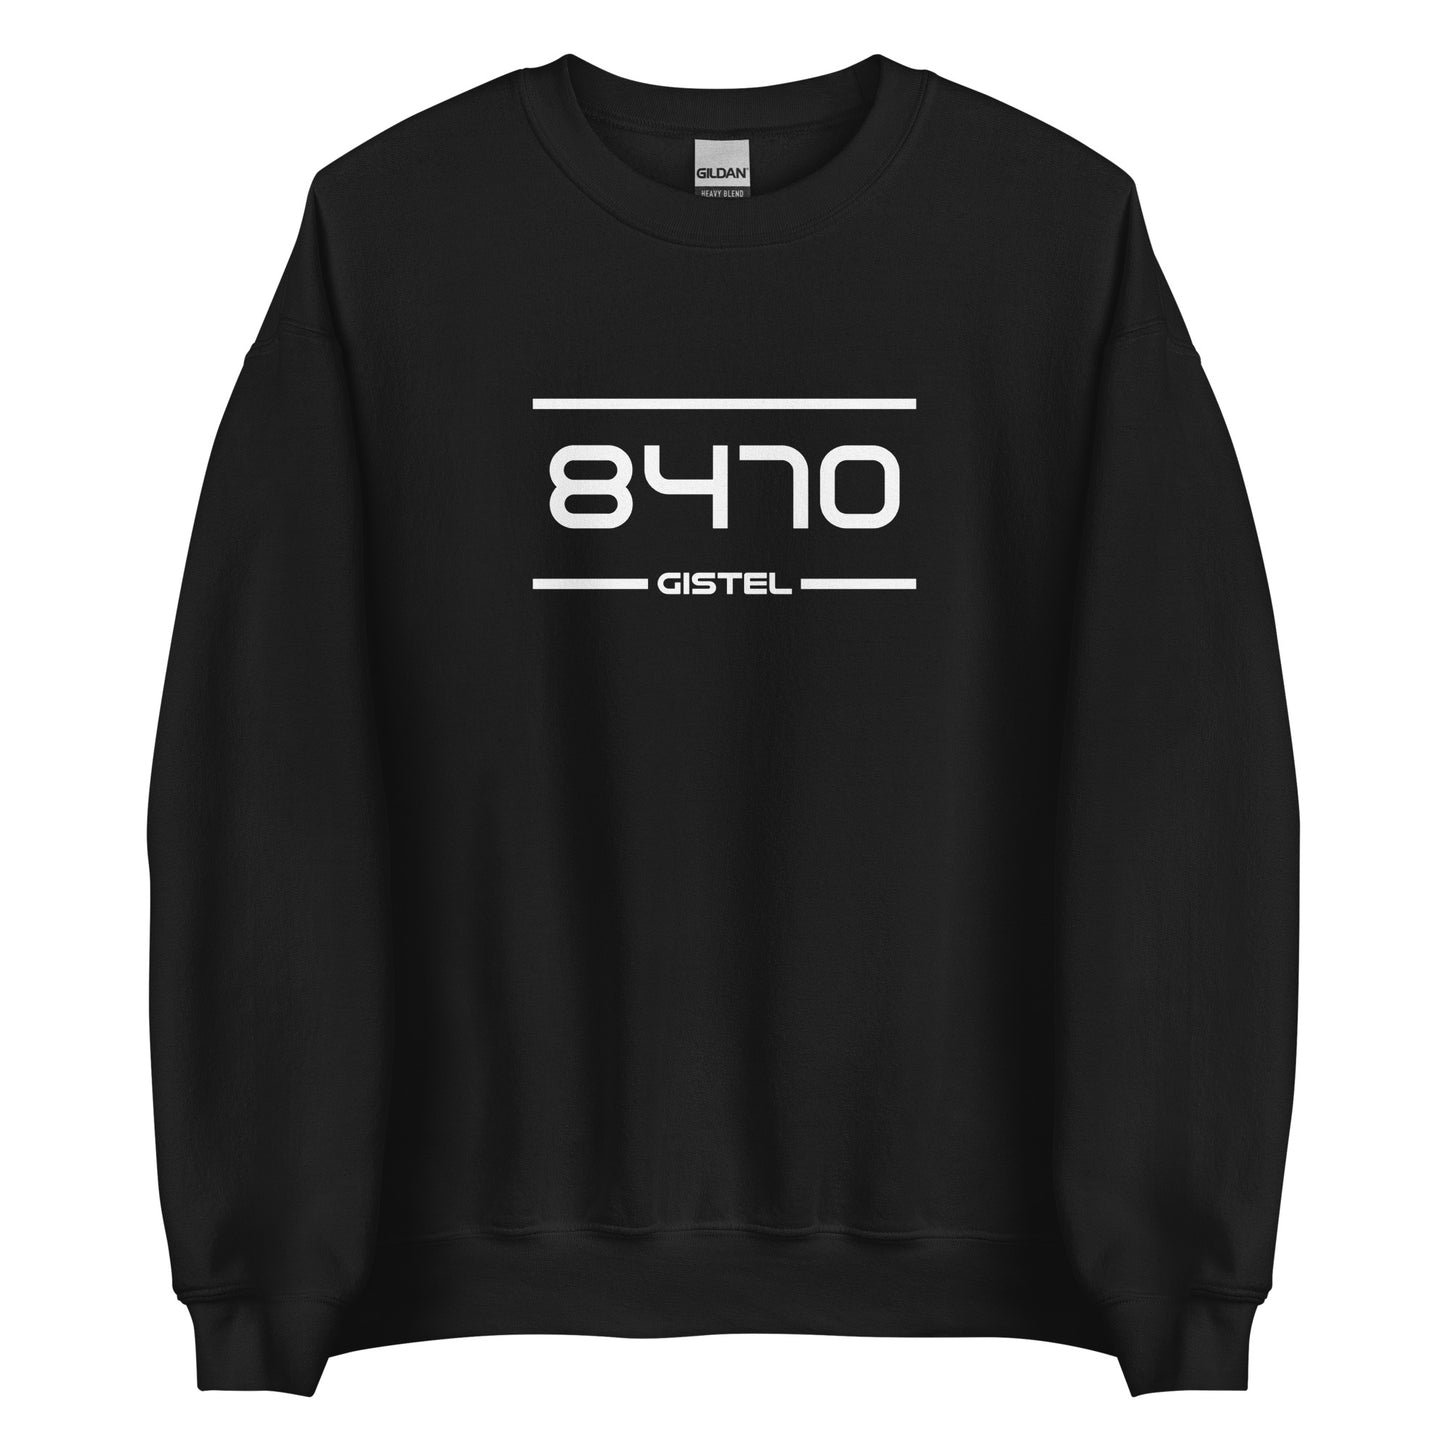 Sweater - 8470 - Gistel (M/V)